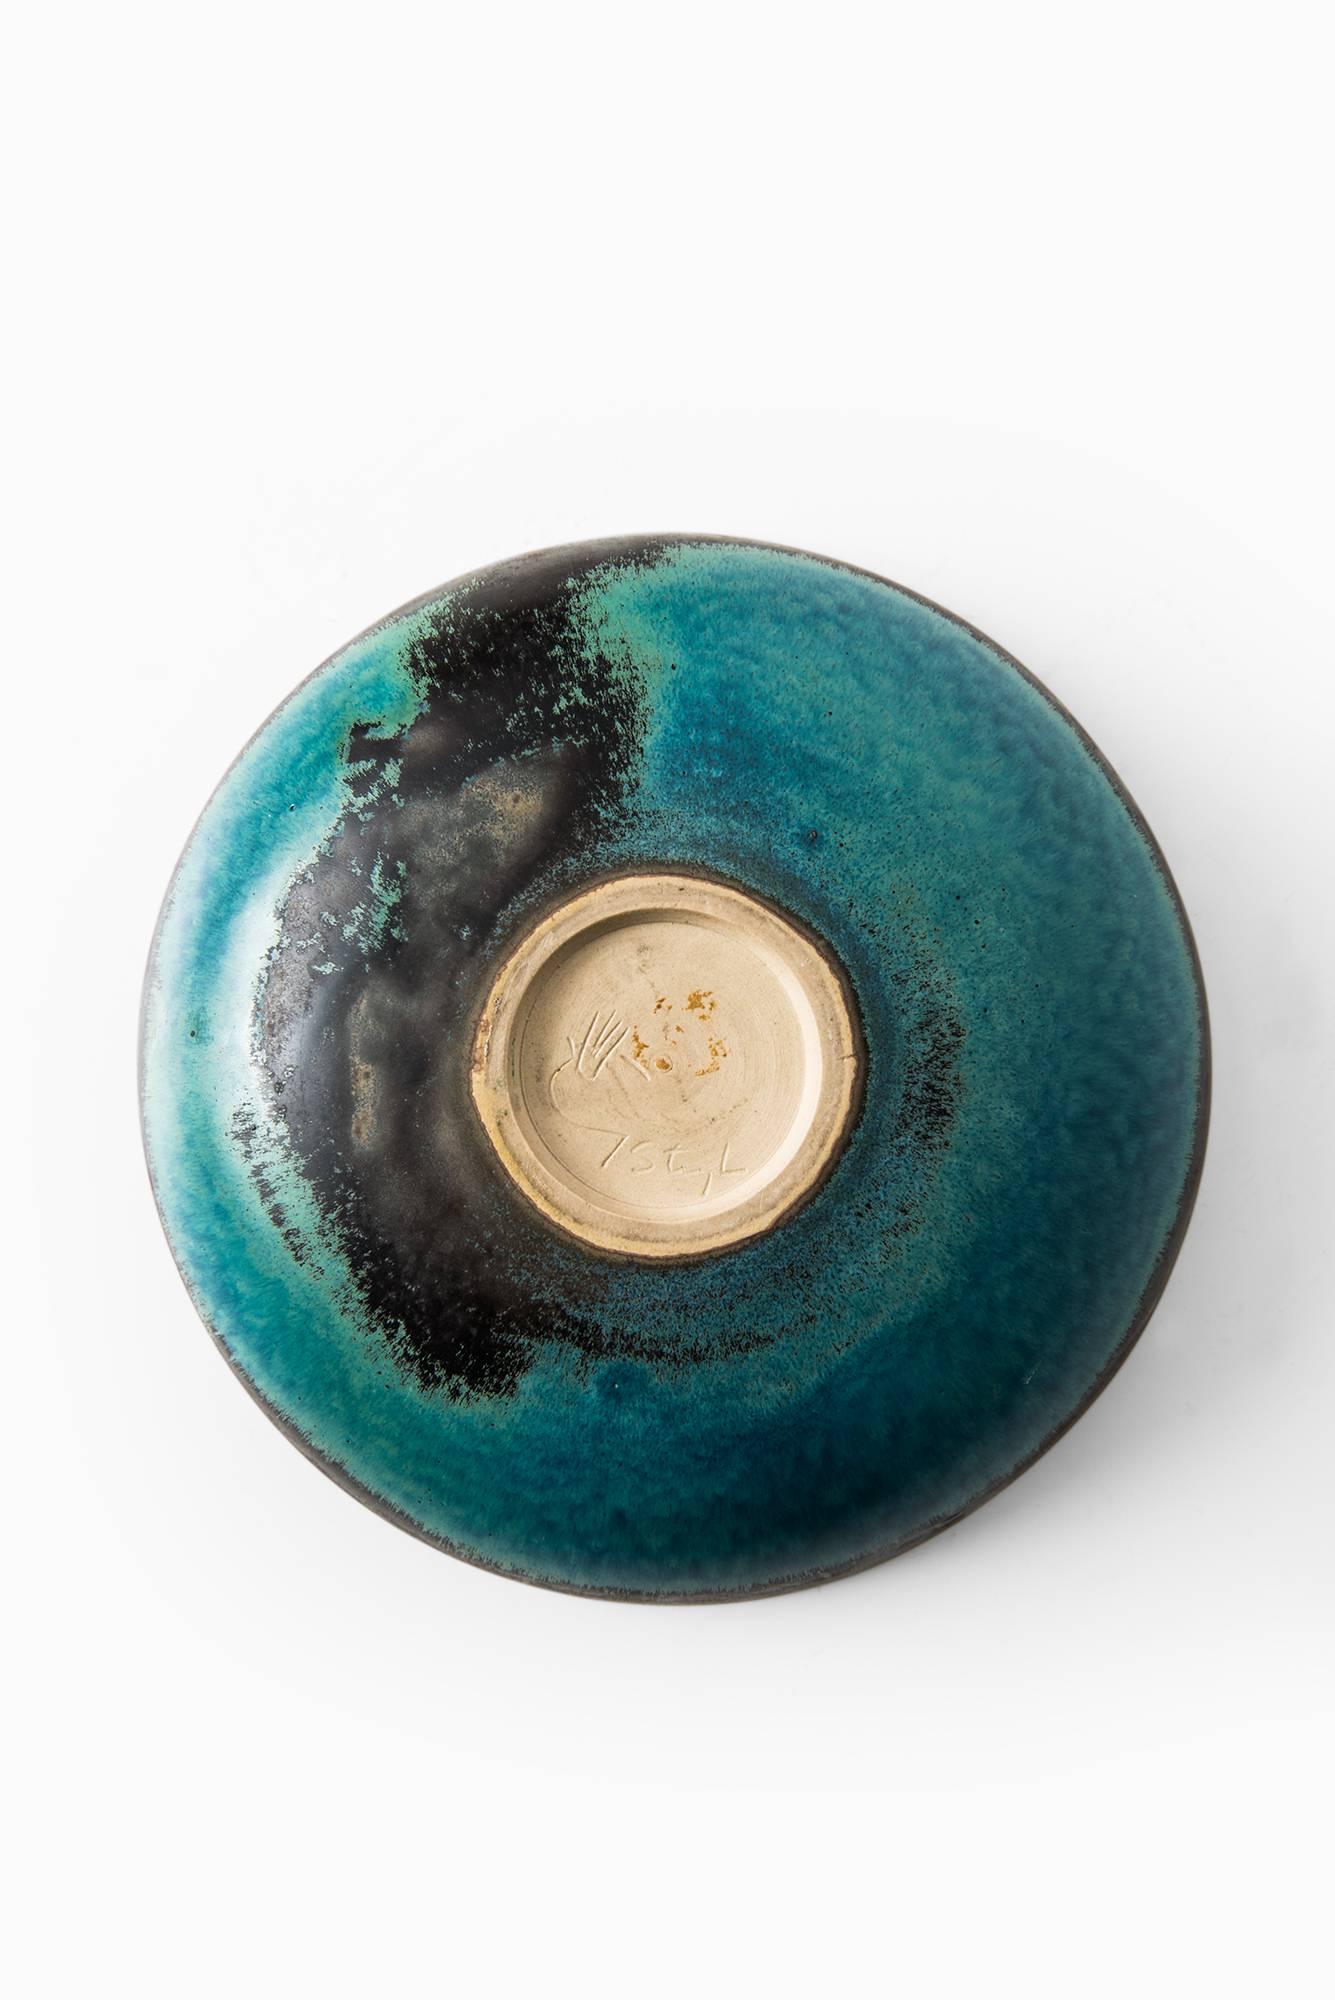 Scandinavian Modern Stig Lindberg Ceramic Bowl by Gustavsberg in Sweden